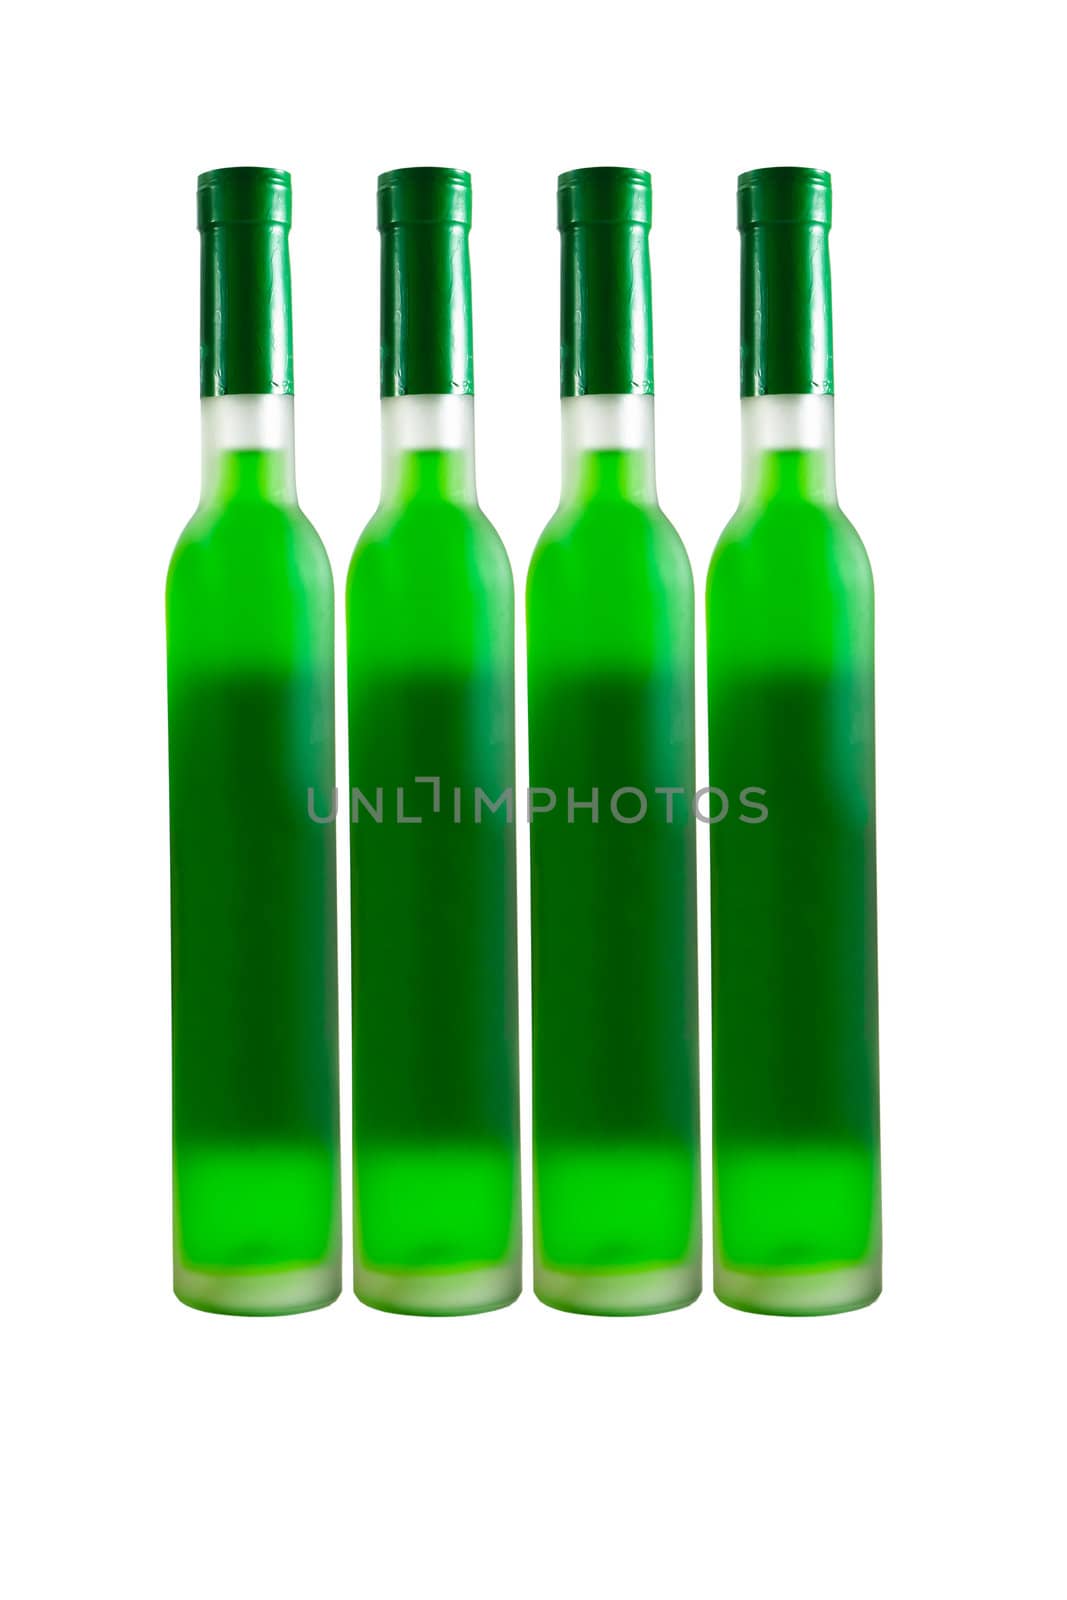 Green wine bottles  by stoonn